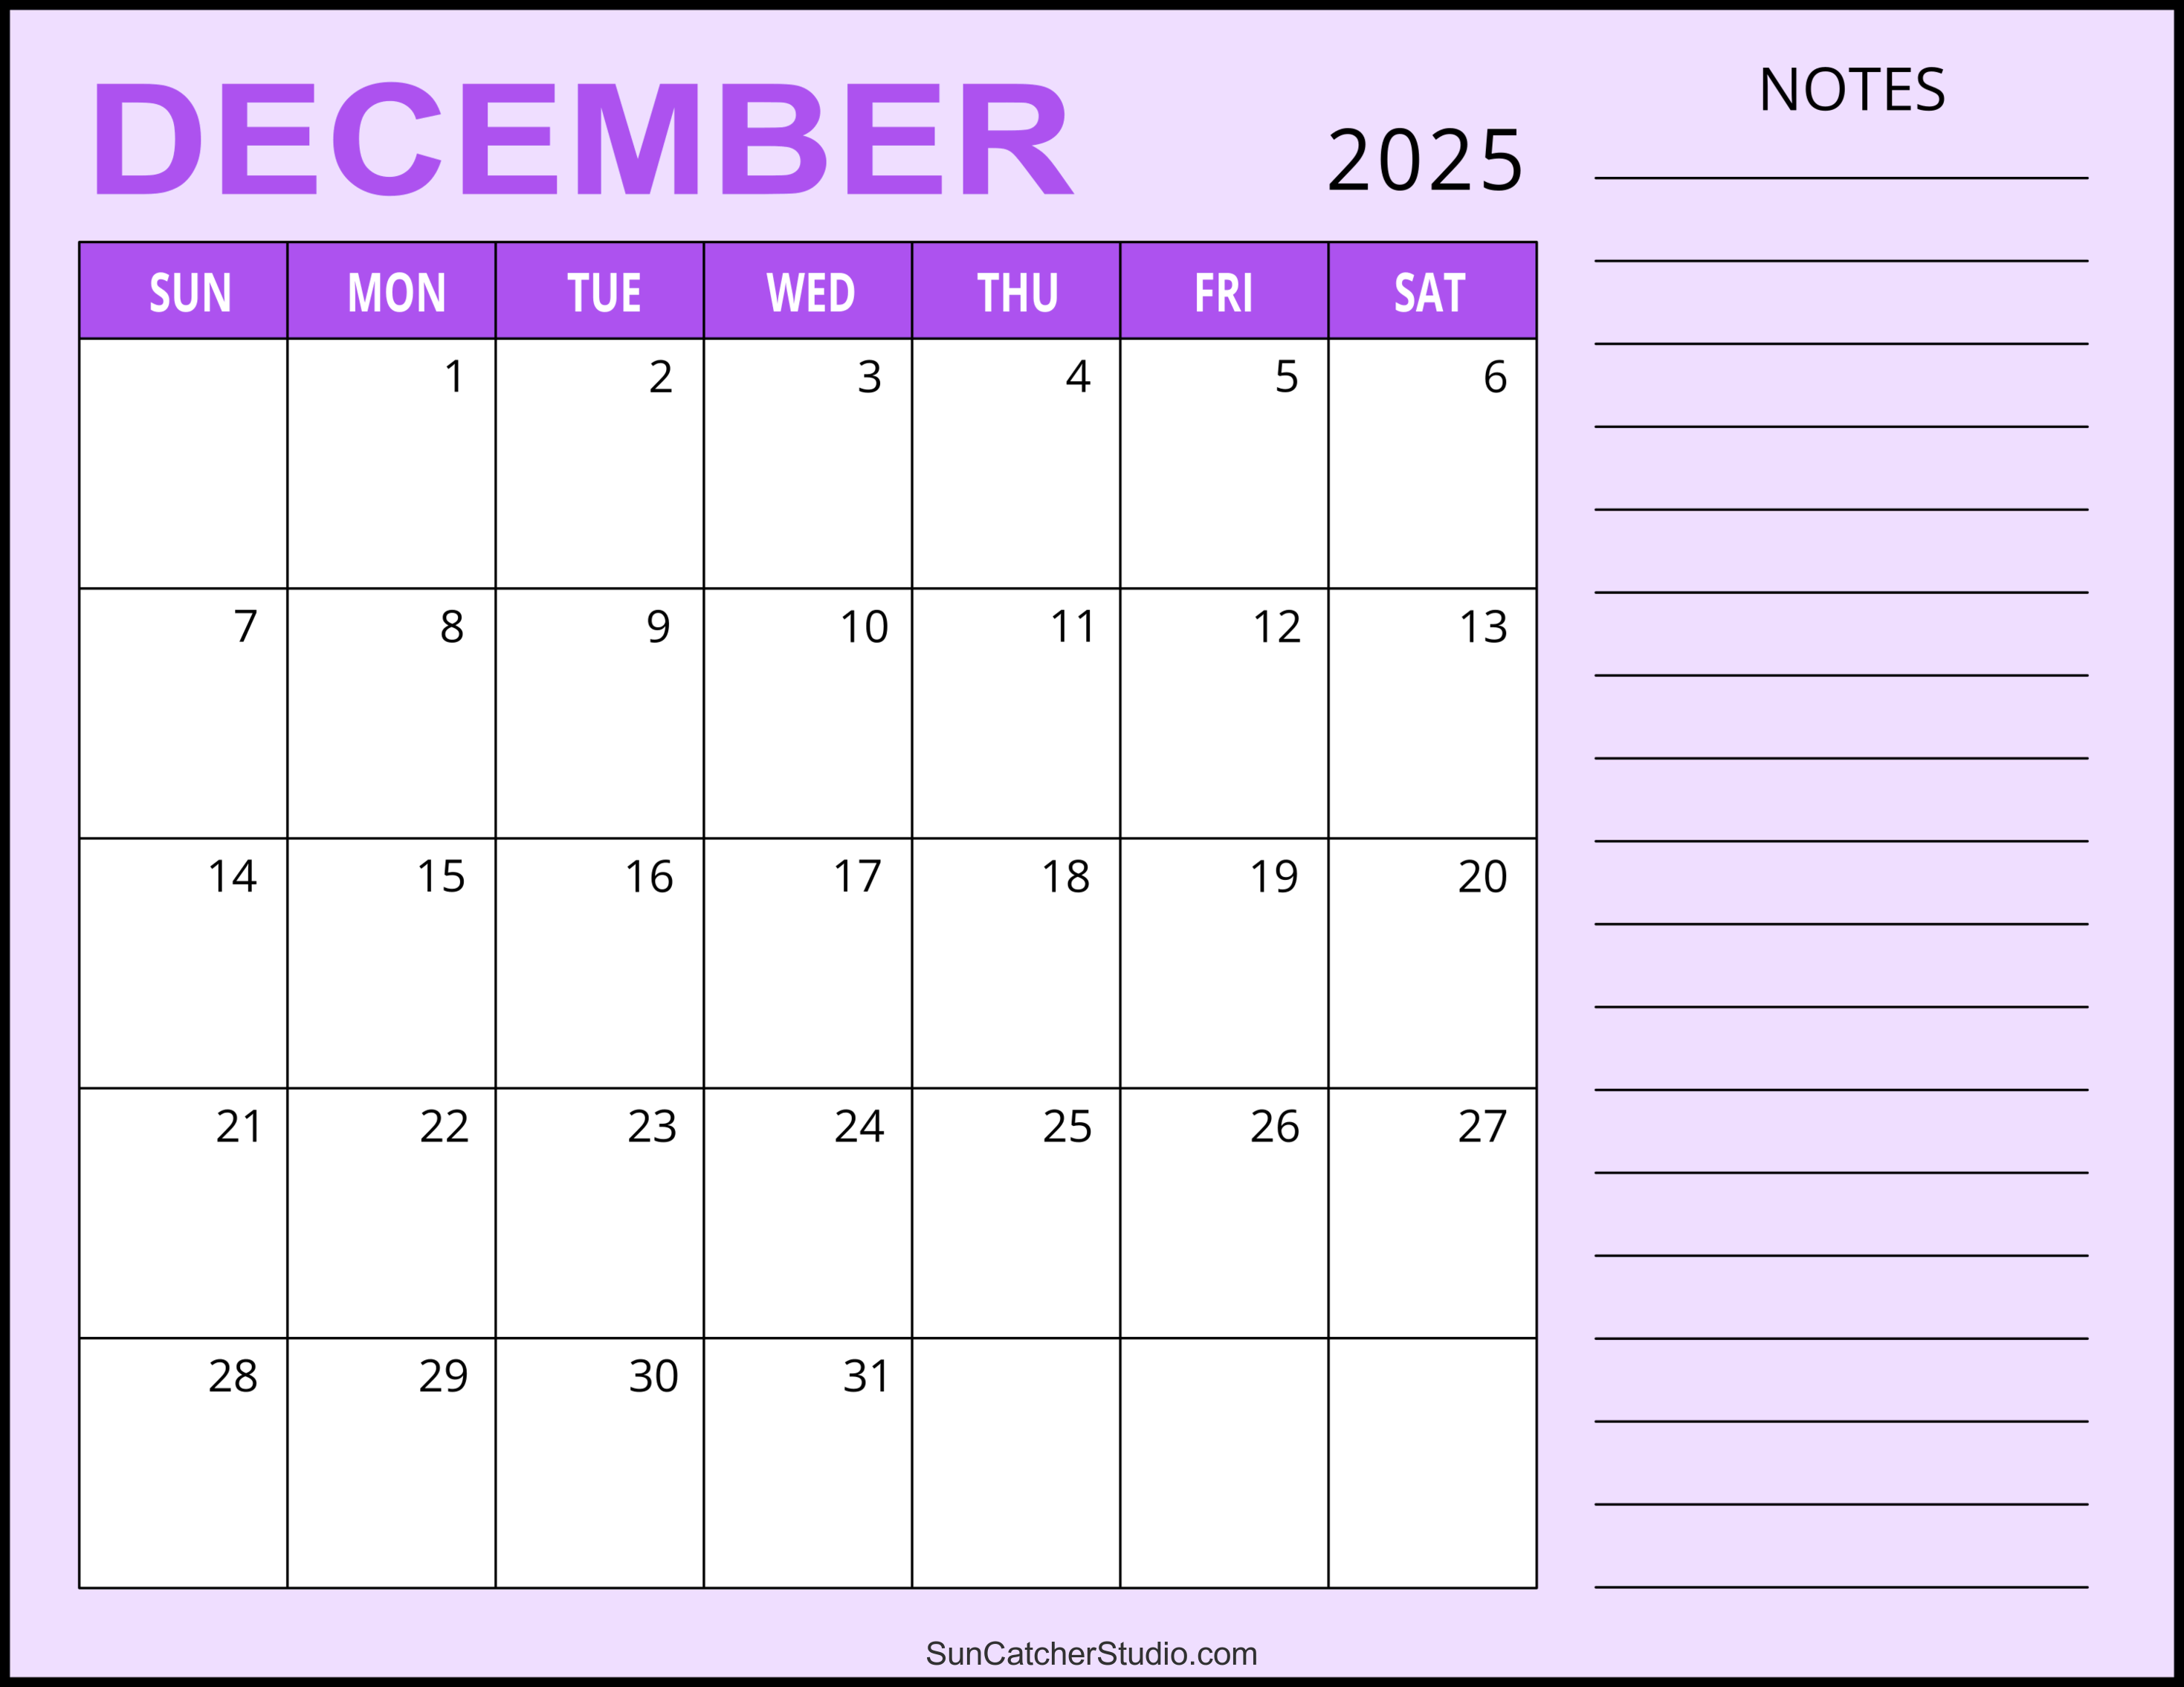 december-2025-calendar-free-printable-diy-projects-patterns-monograms-designs-templates